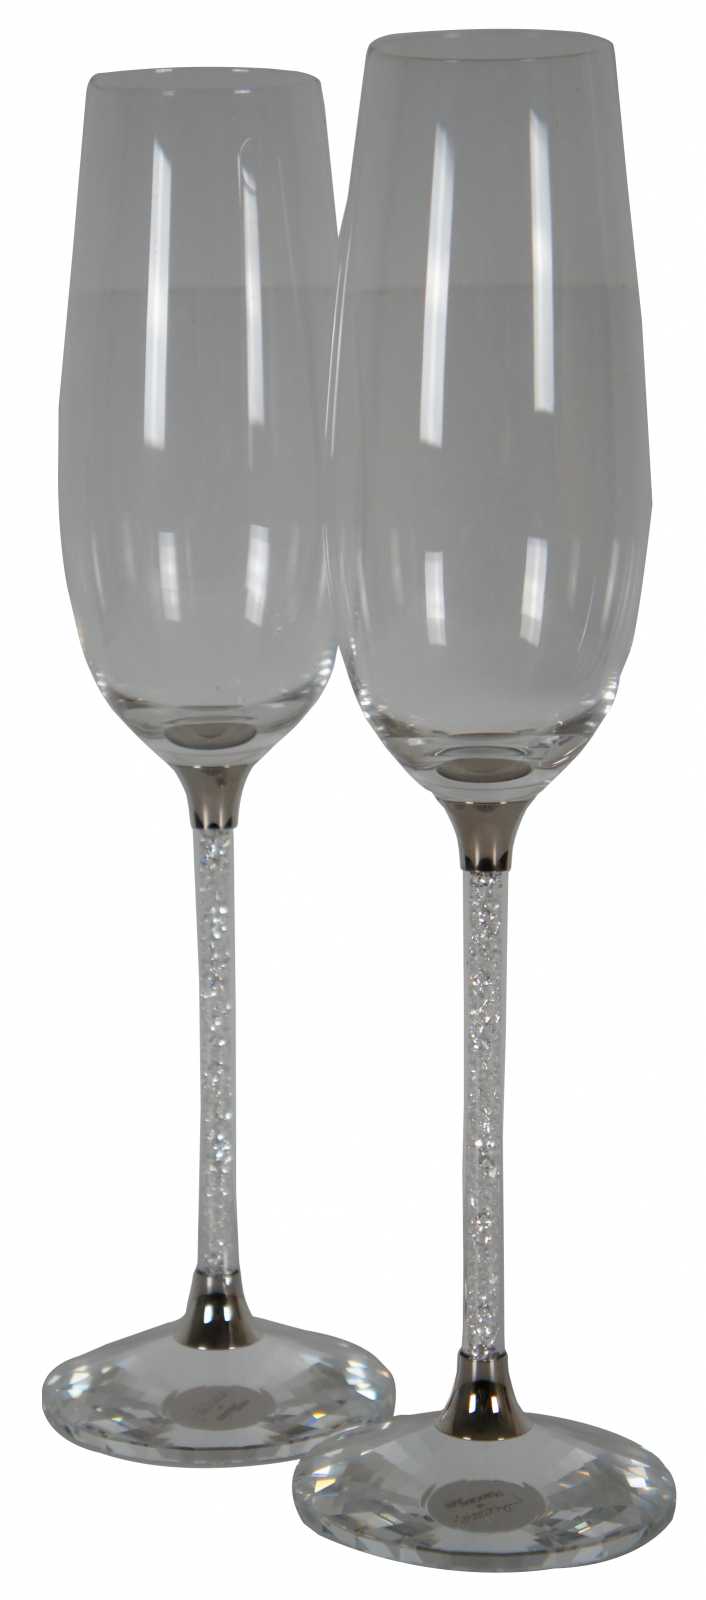 Glasses, Champagne Flutes, Swarovski Embellished Glasses, Wine glasses,  Toasting glasses, Toasting Wine Glasses, Challis